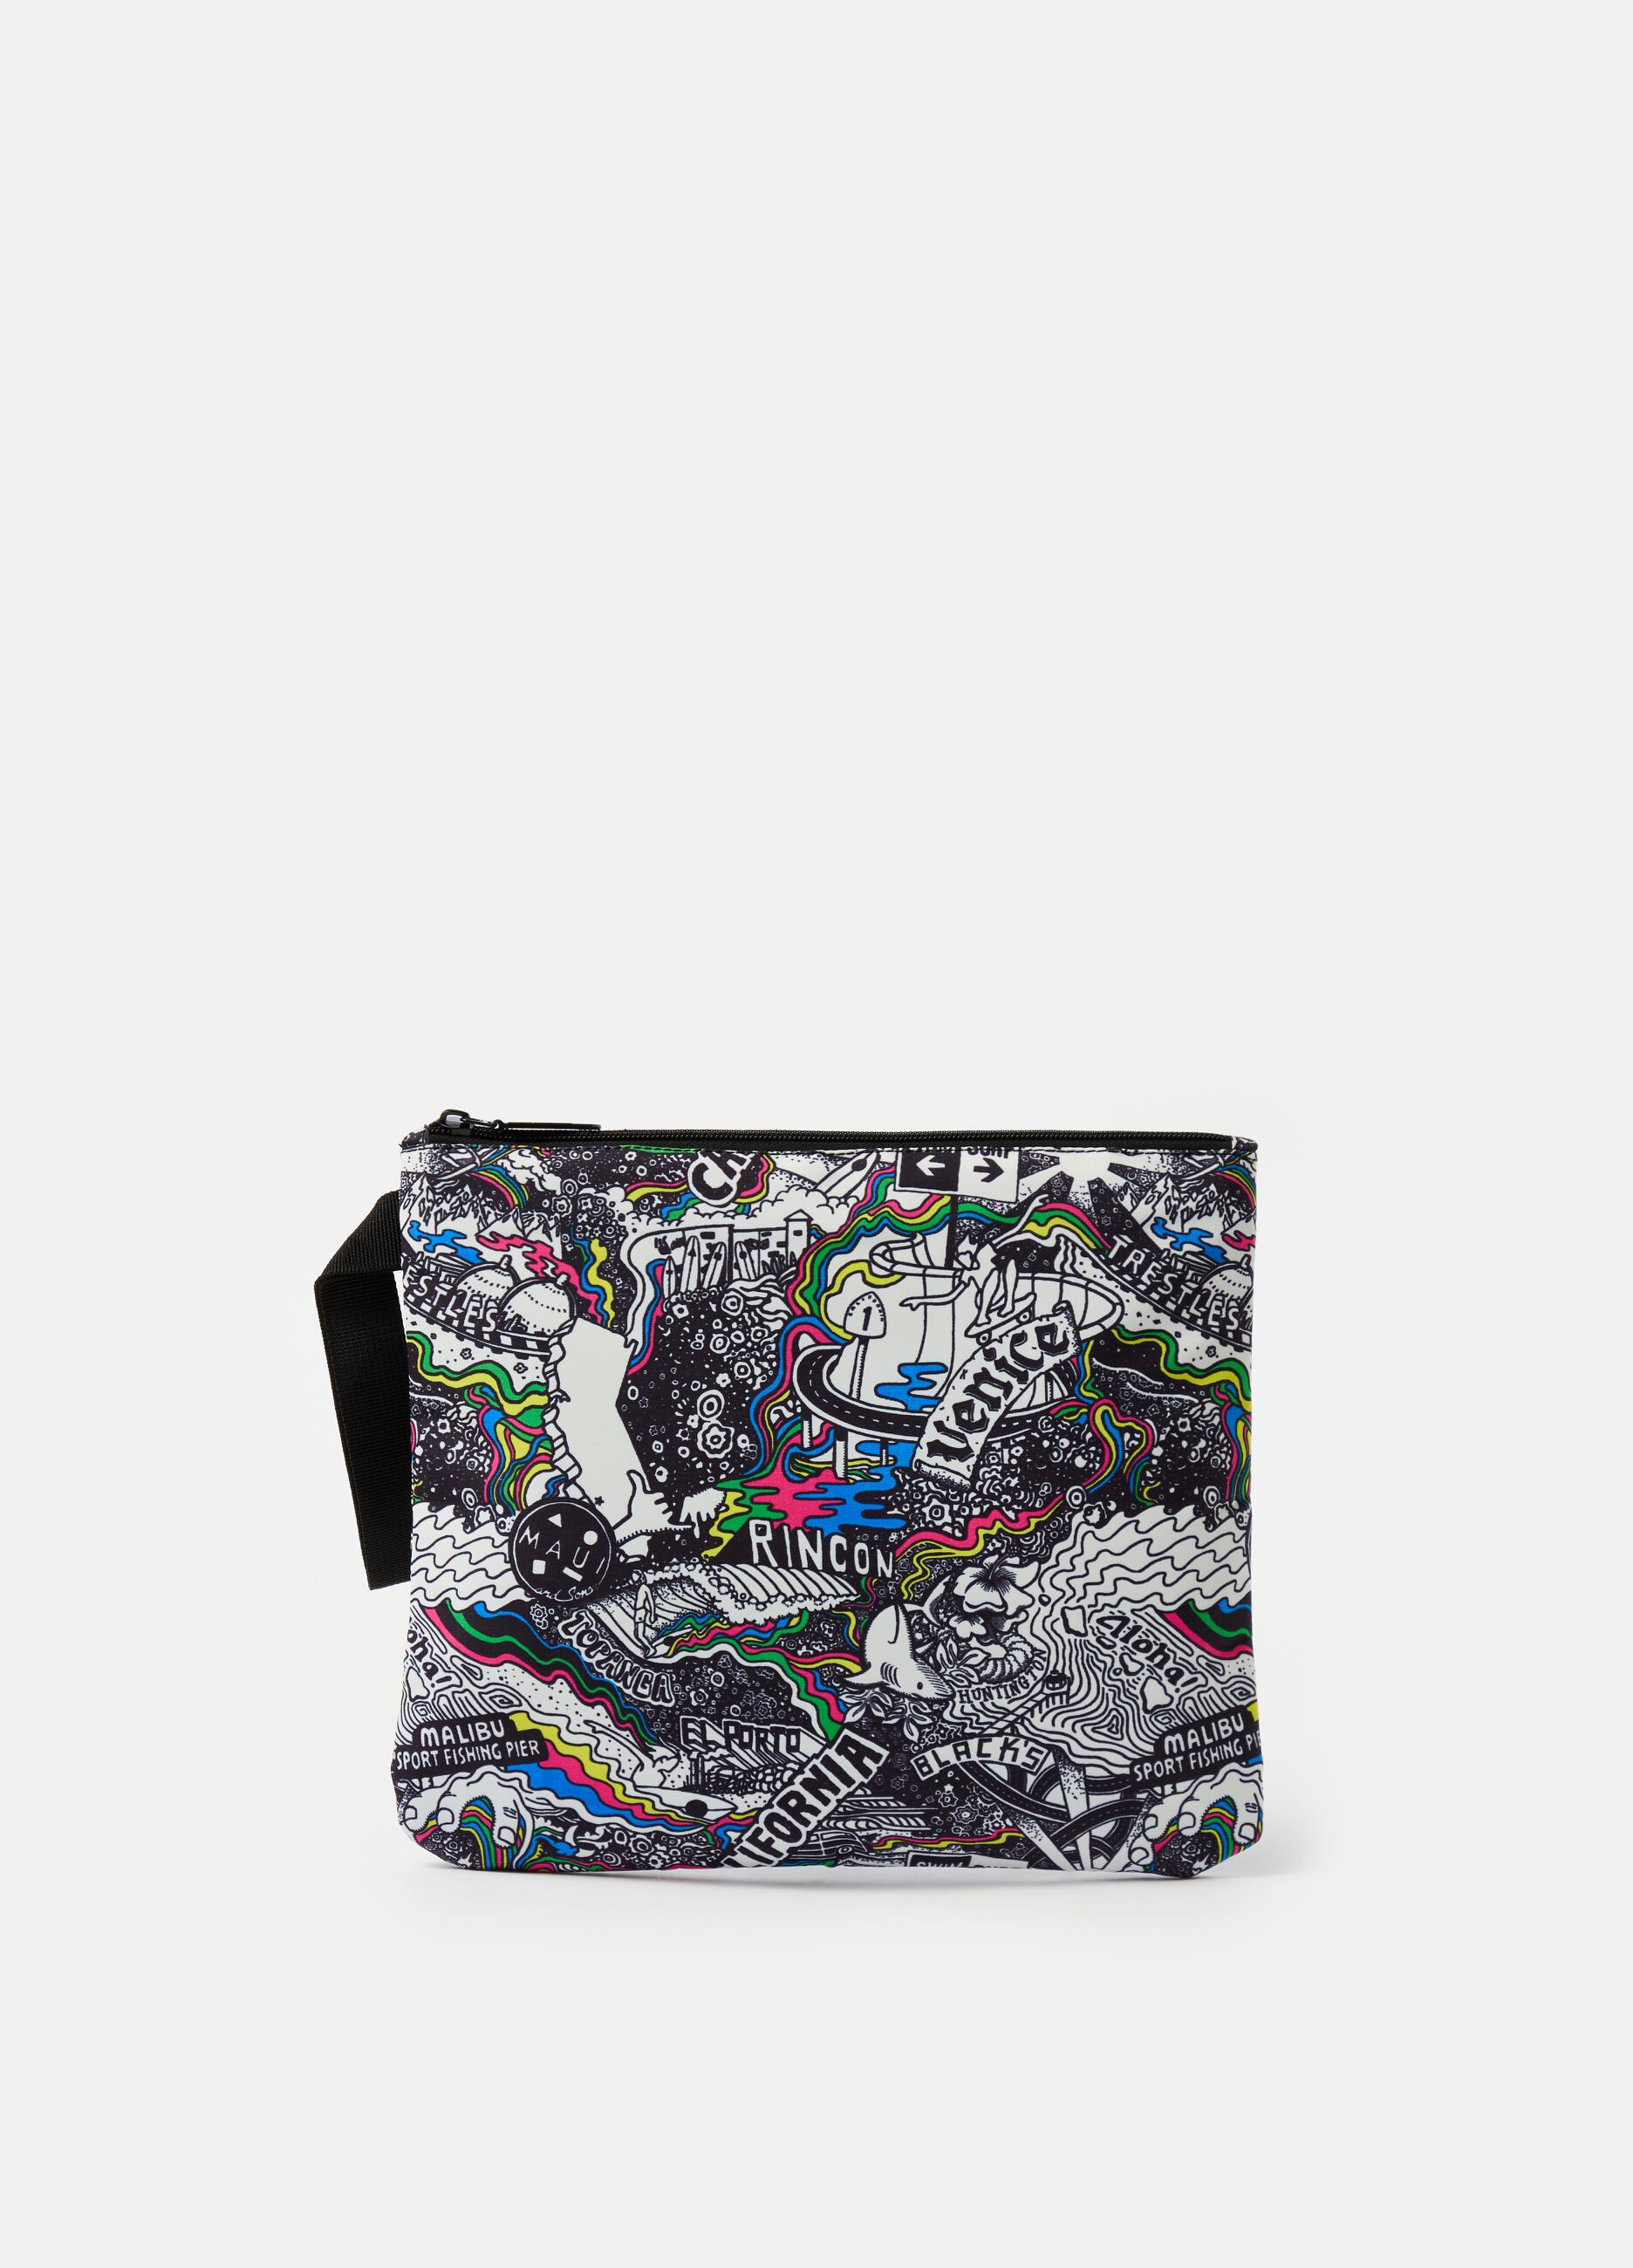 Clutch bag with city motif print